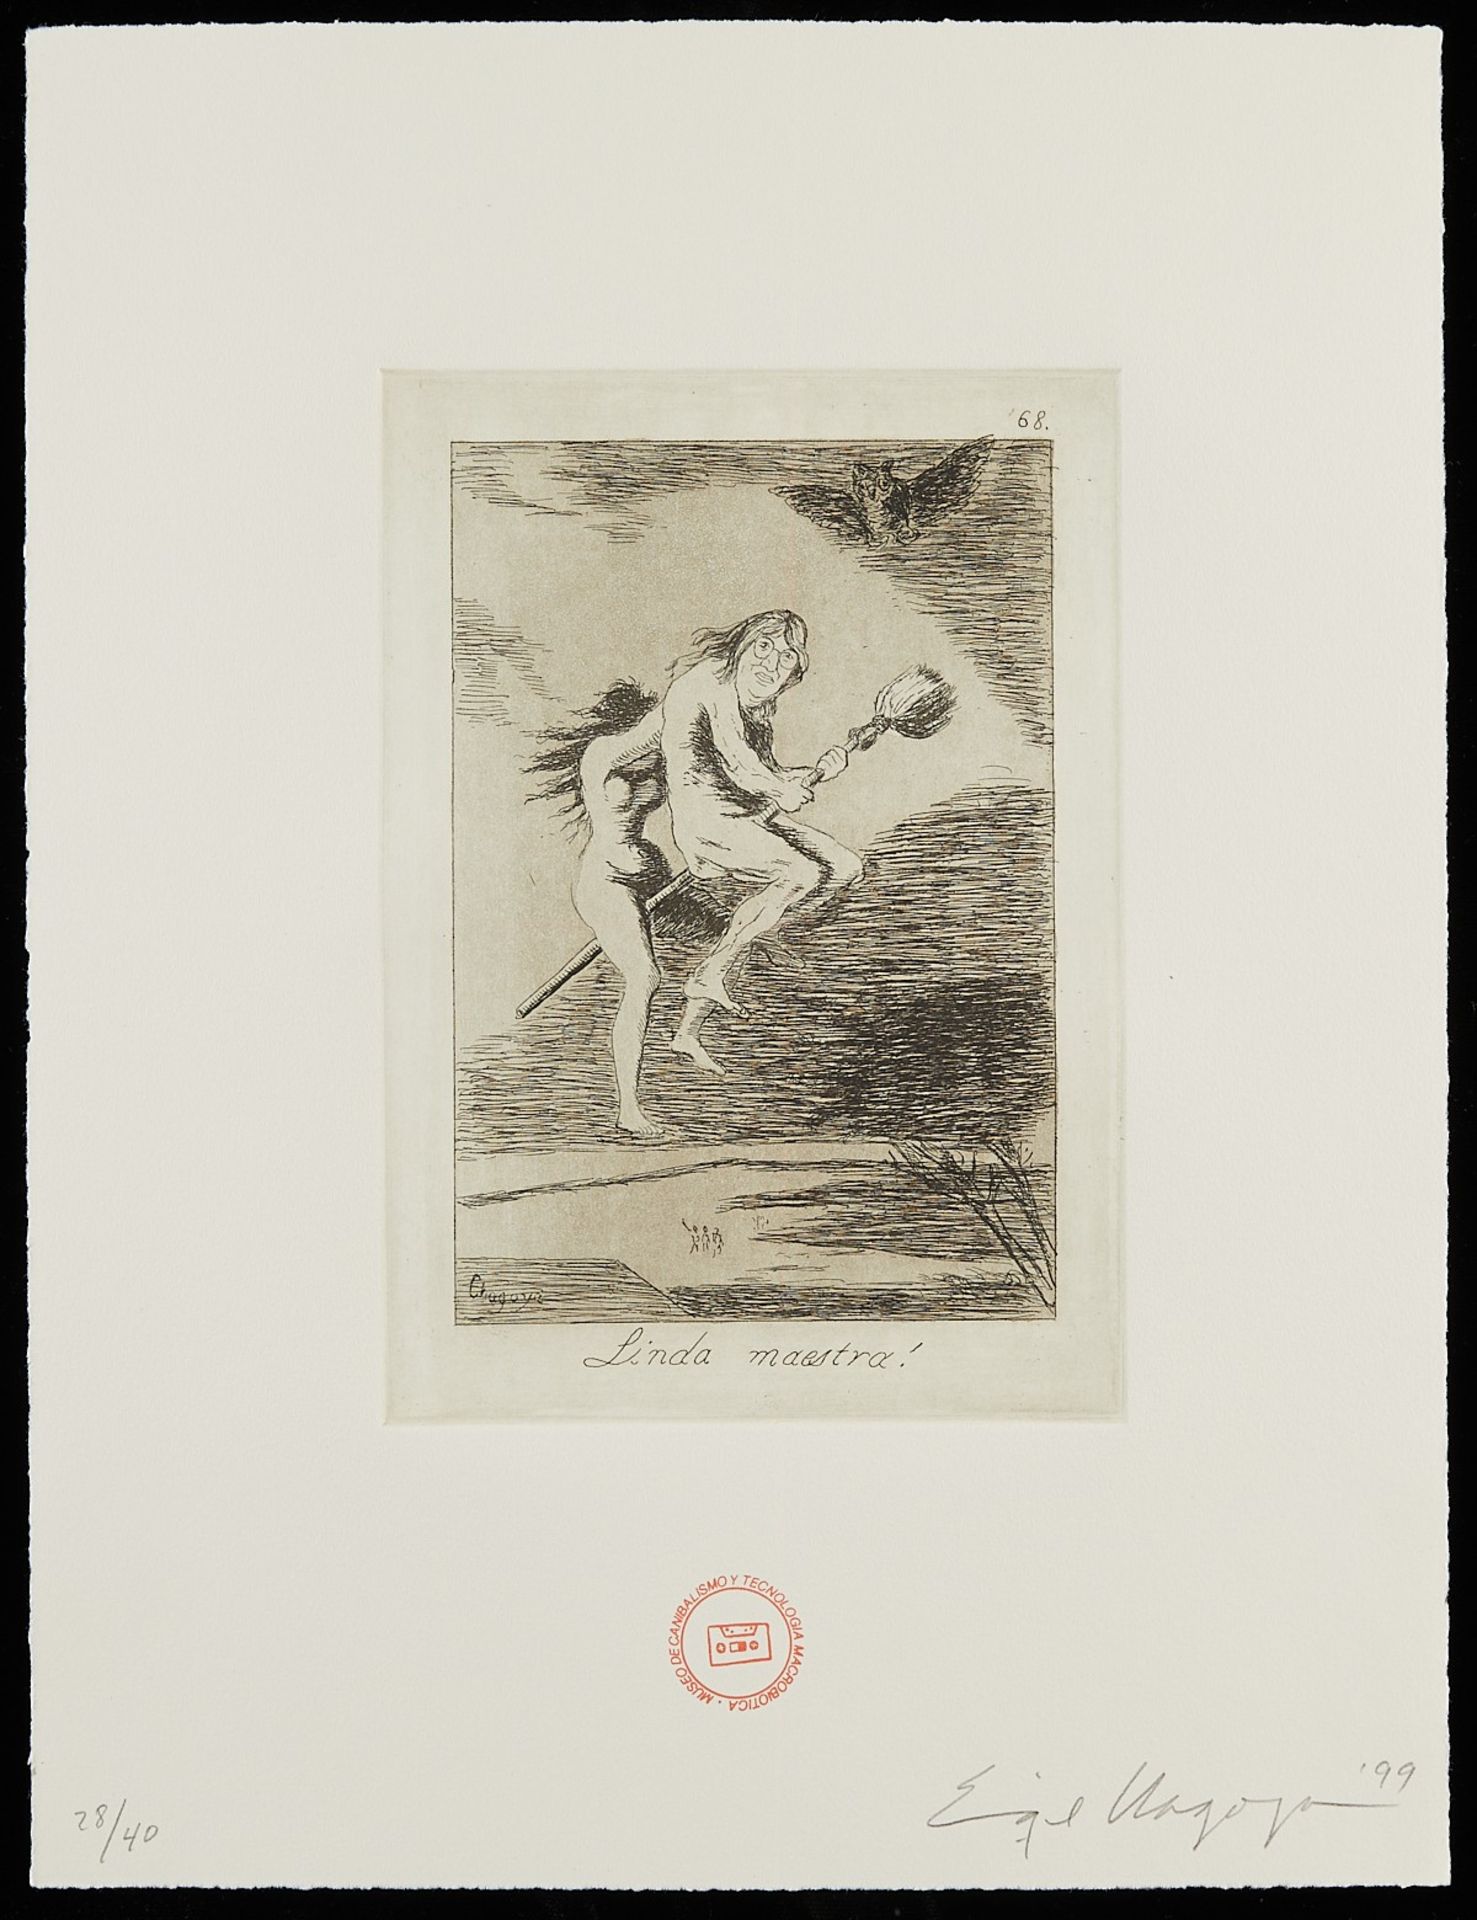 Grp: 8 Chagoya "Return To Goya's Caprichos" Suite - Image 17 of 40